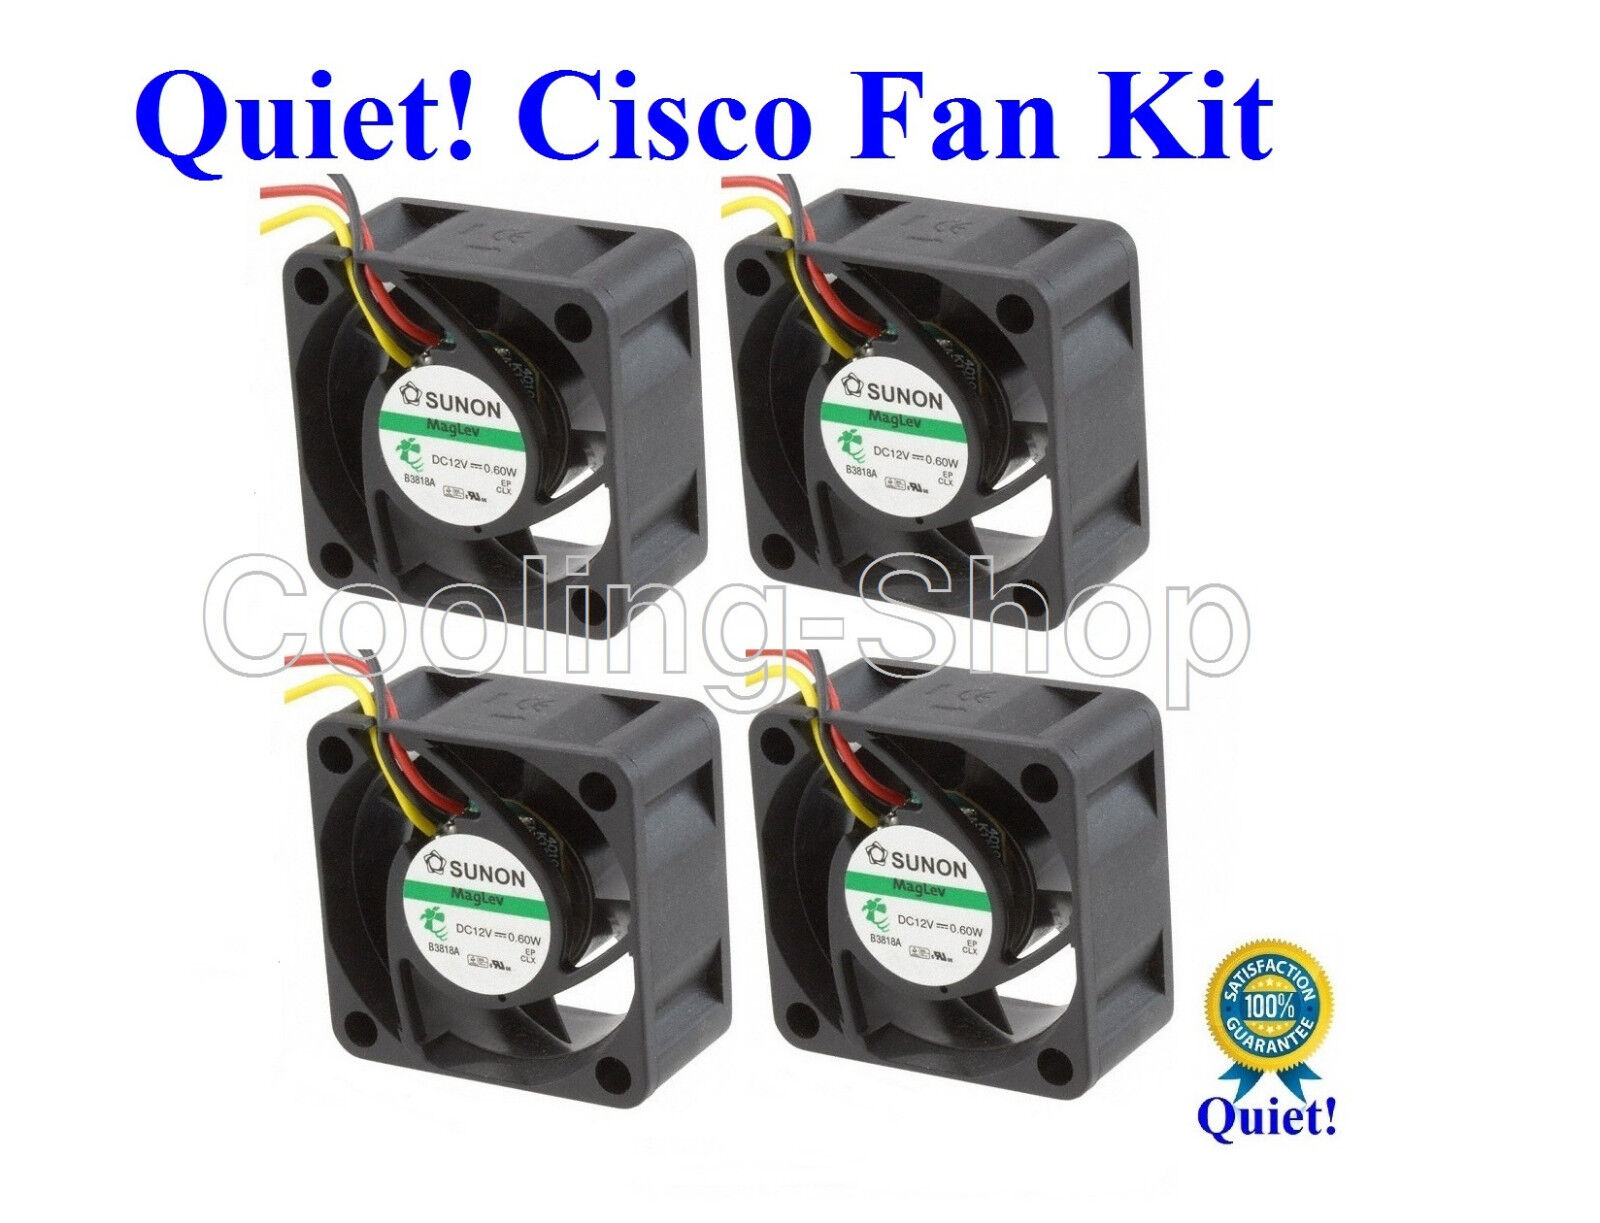 Pack of 4 Super Quiet Replacement Sunon Fans for Cisco SG300-52P Low Noise